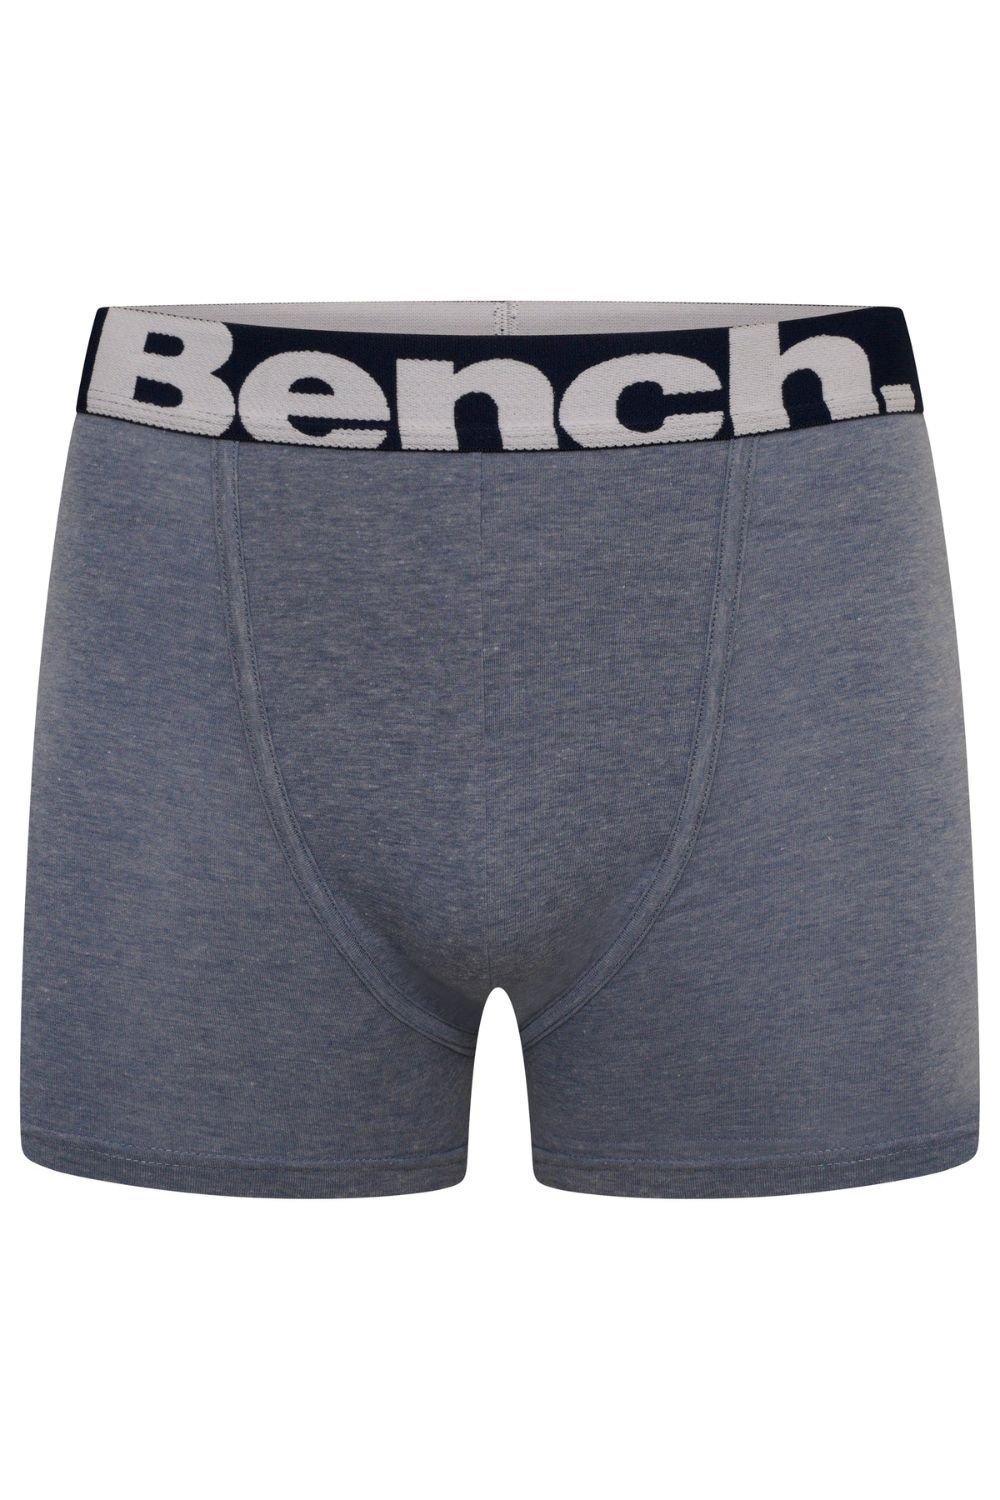 BENCH Boxer shorts in Blue, Purple, Black